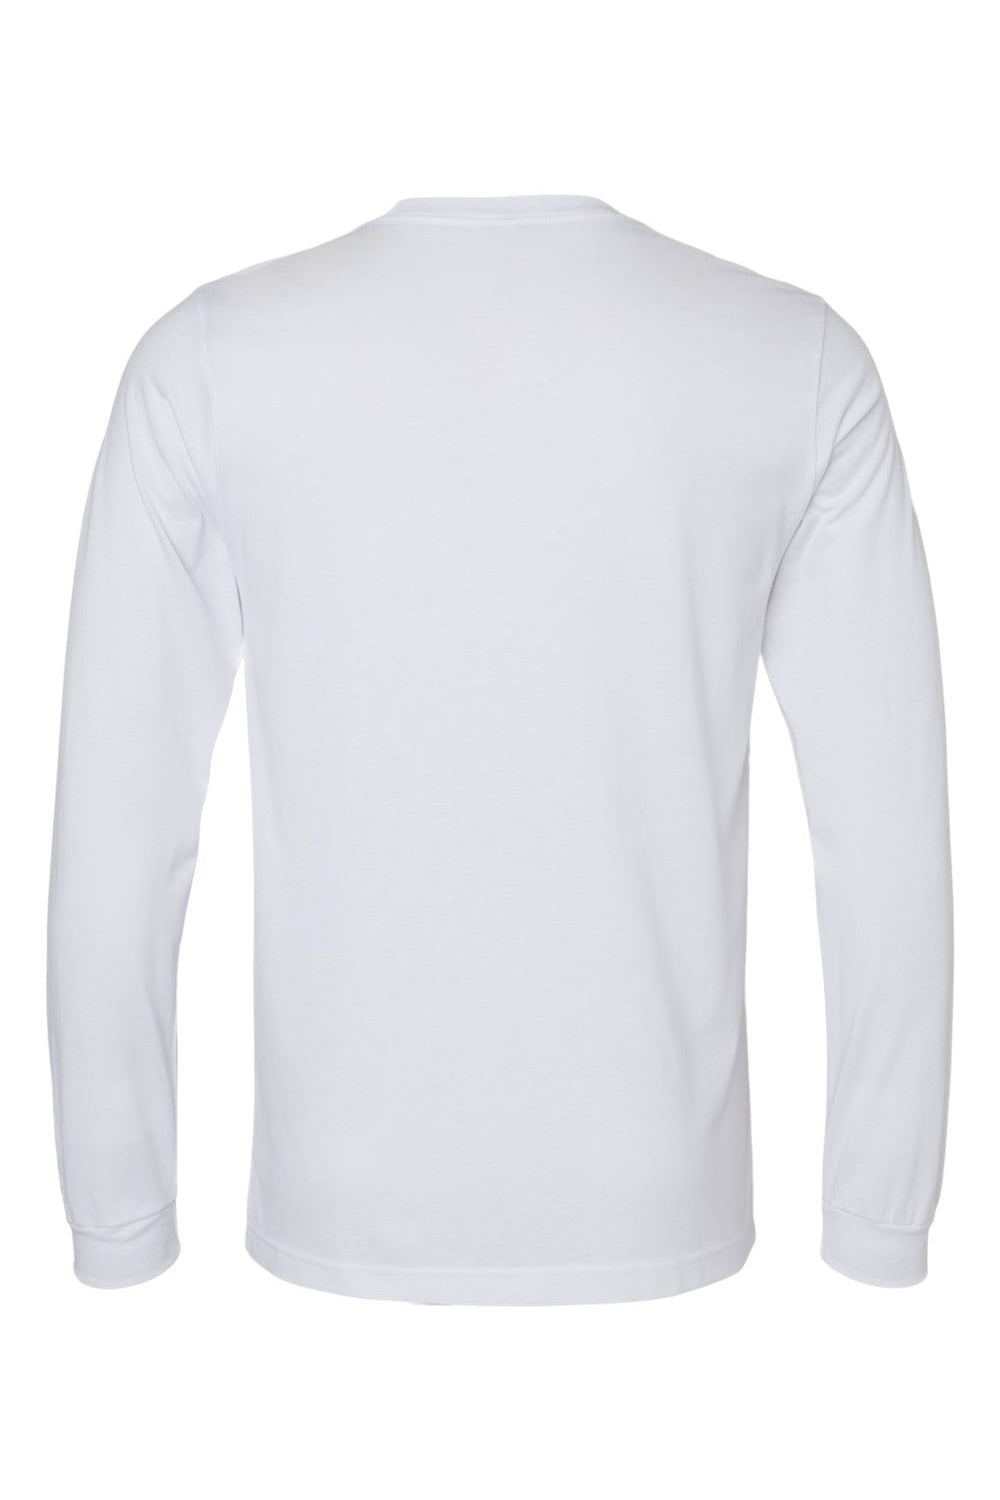 Bella + Canvas BC3501CVC Mens CVC Long Sleeve Crewneck T-Shirt Solid White Flat Back